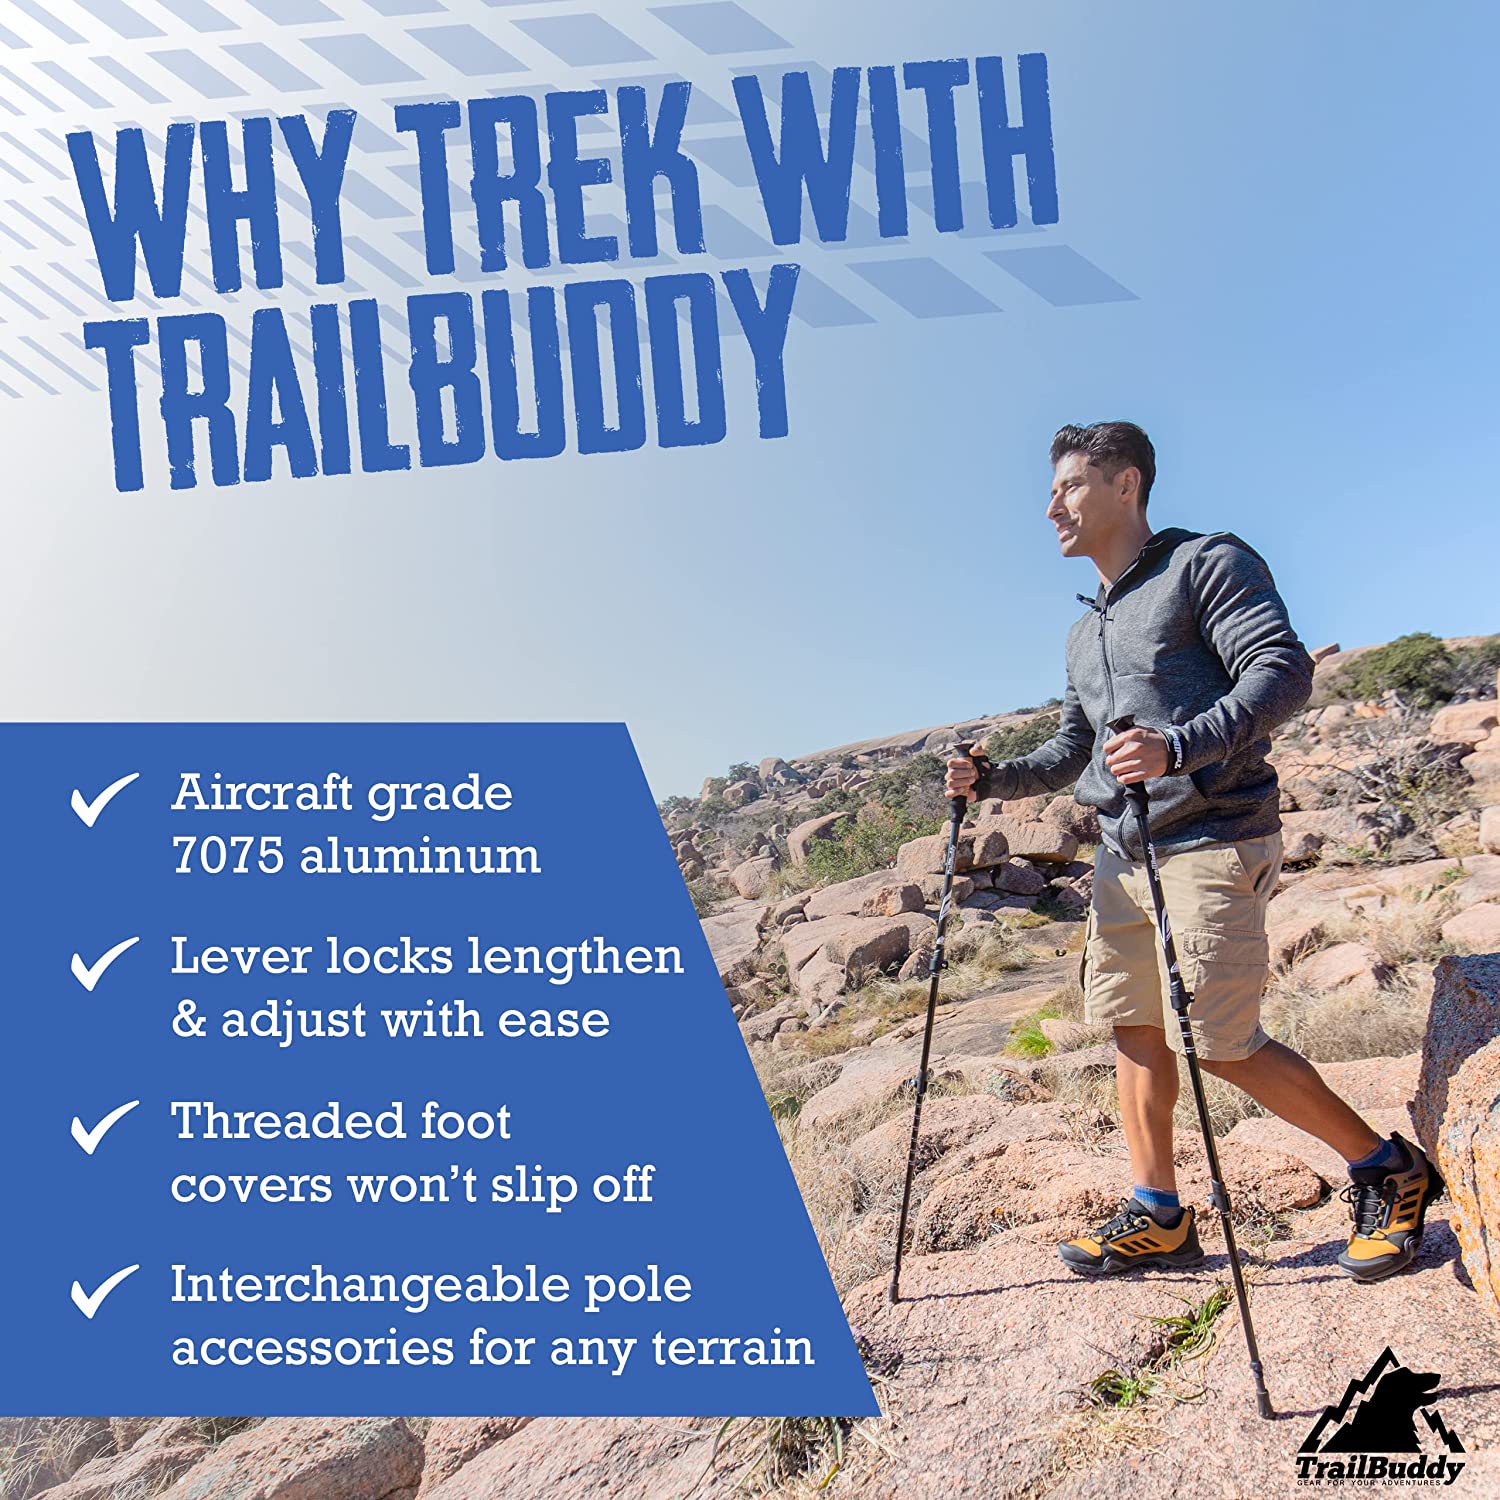 TrailBuddy Lightweight Trekking Poles, Set of 2 Pack Adjustable Aluminum Hiking or Walking Sticks, Quick Adjust Flip-Lock, Cork Grip, Padded Strap, Bumblebee Yellow - image 3 of 7